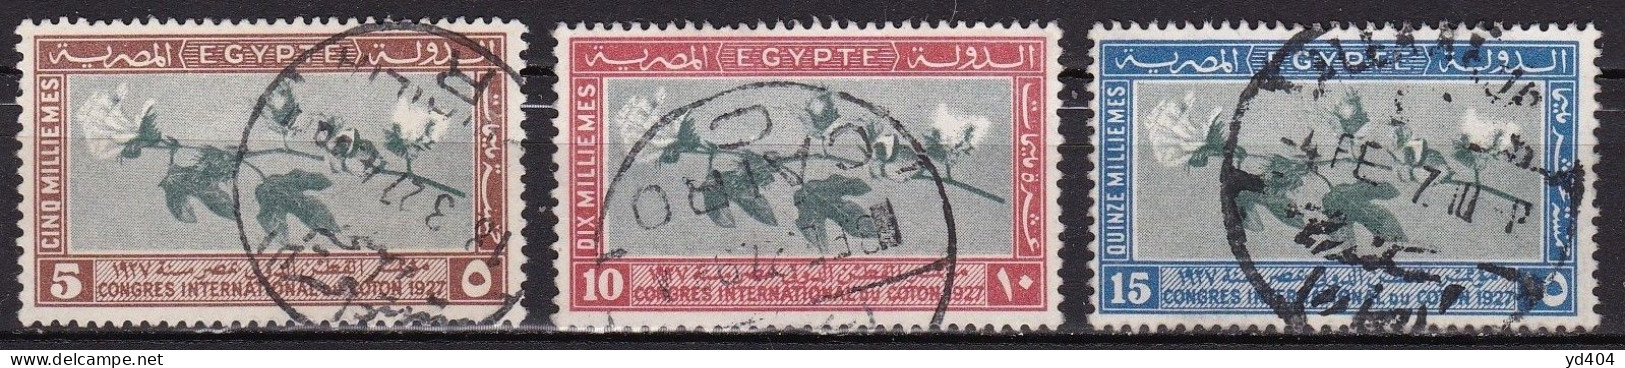 EG061 – EGYPTE – EGYPT – 1927 – INTERNATIONAL COTTON CONGRESS - Y&T # 115/117 USED - Gebraucht